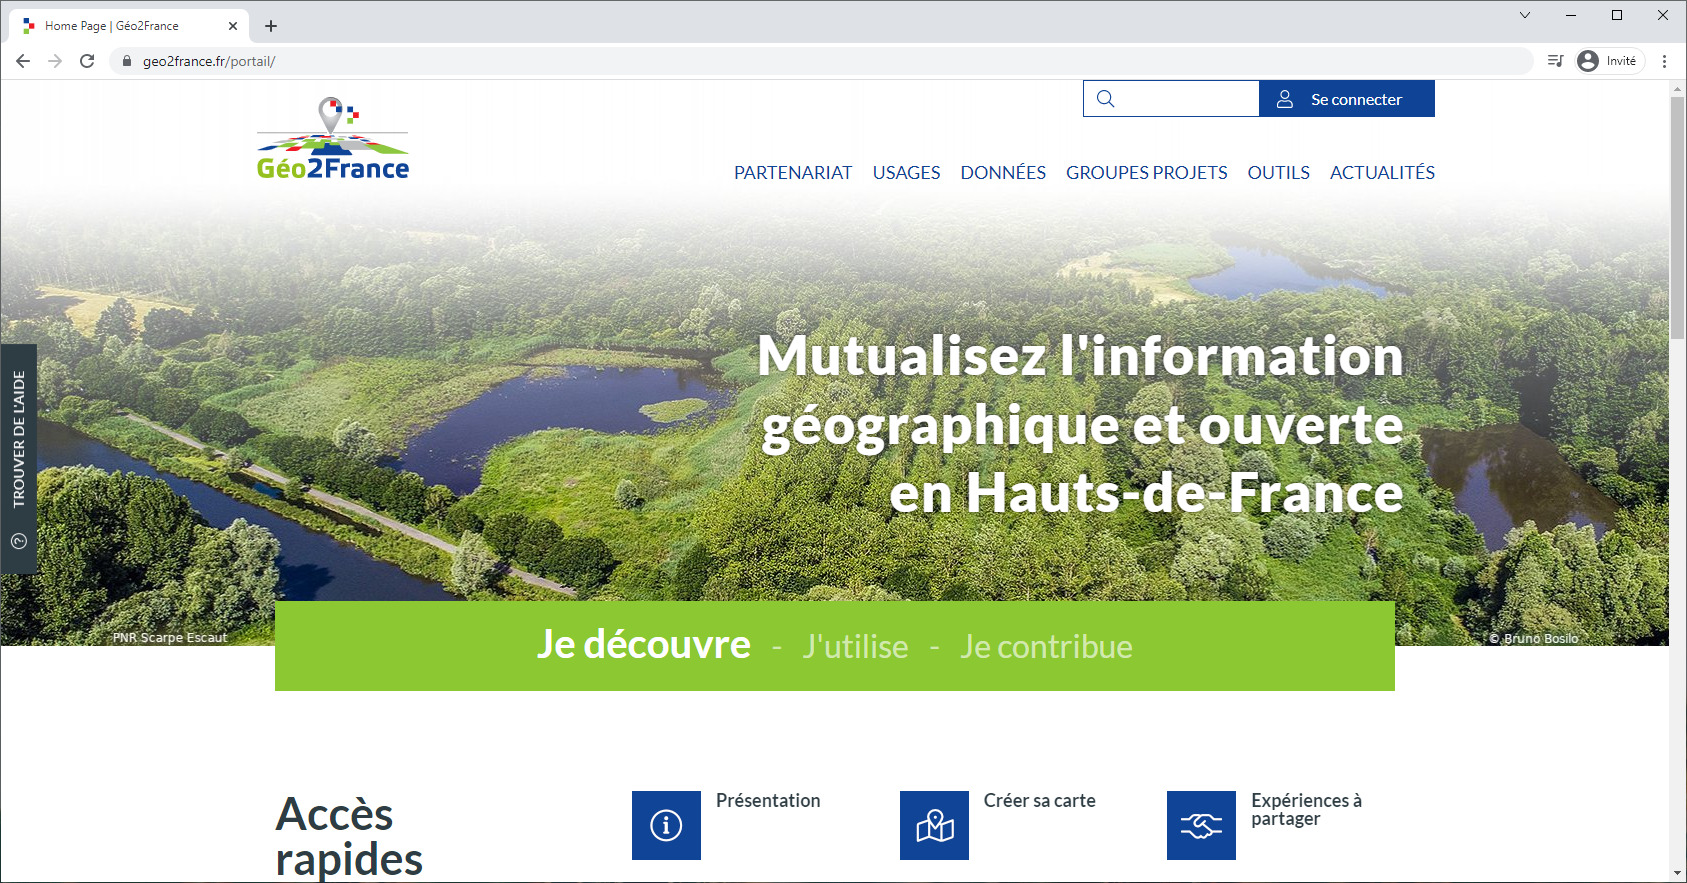 Interface web Haut de France (Francia)